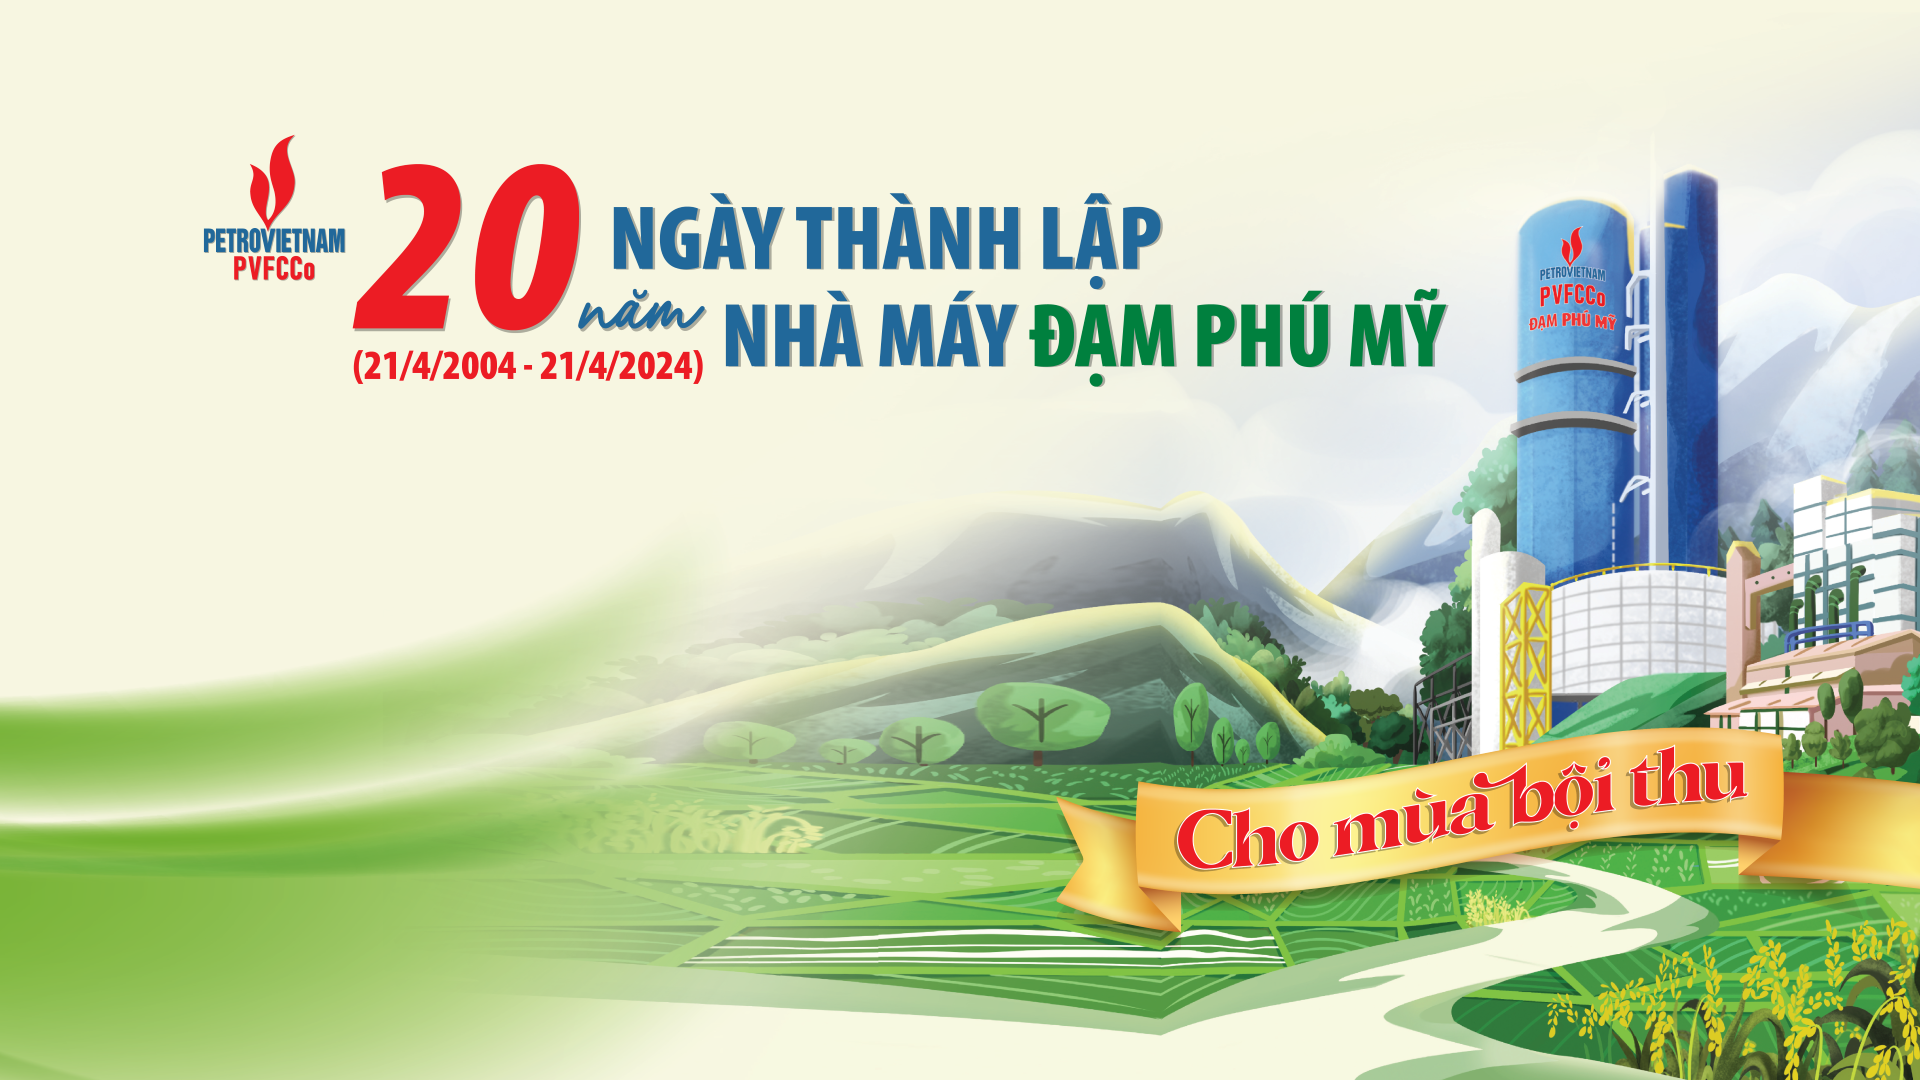 “20th Anniversary of the Establishment of Phu My Fertilizer Plant (21/4/2004-21/4/2024)”